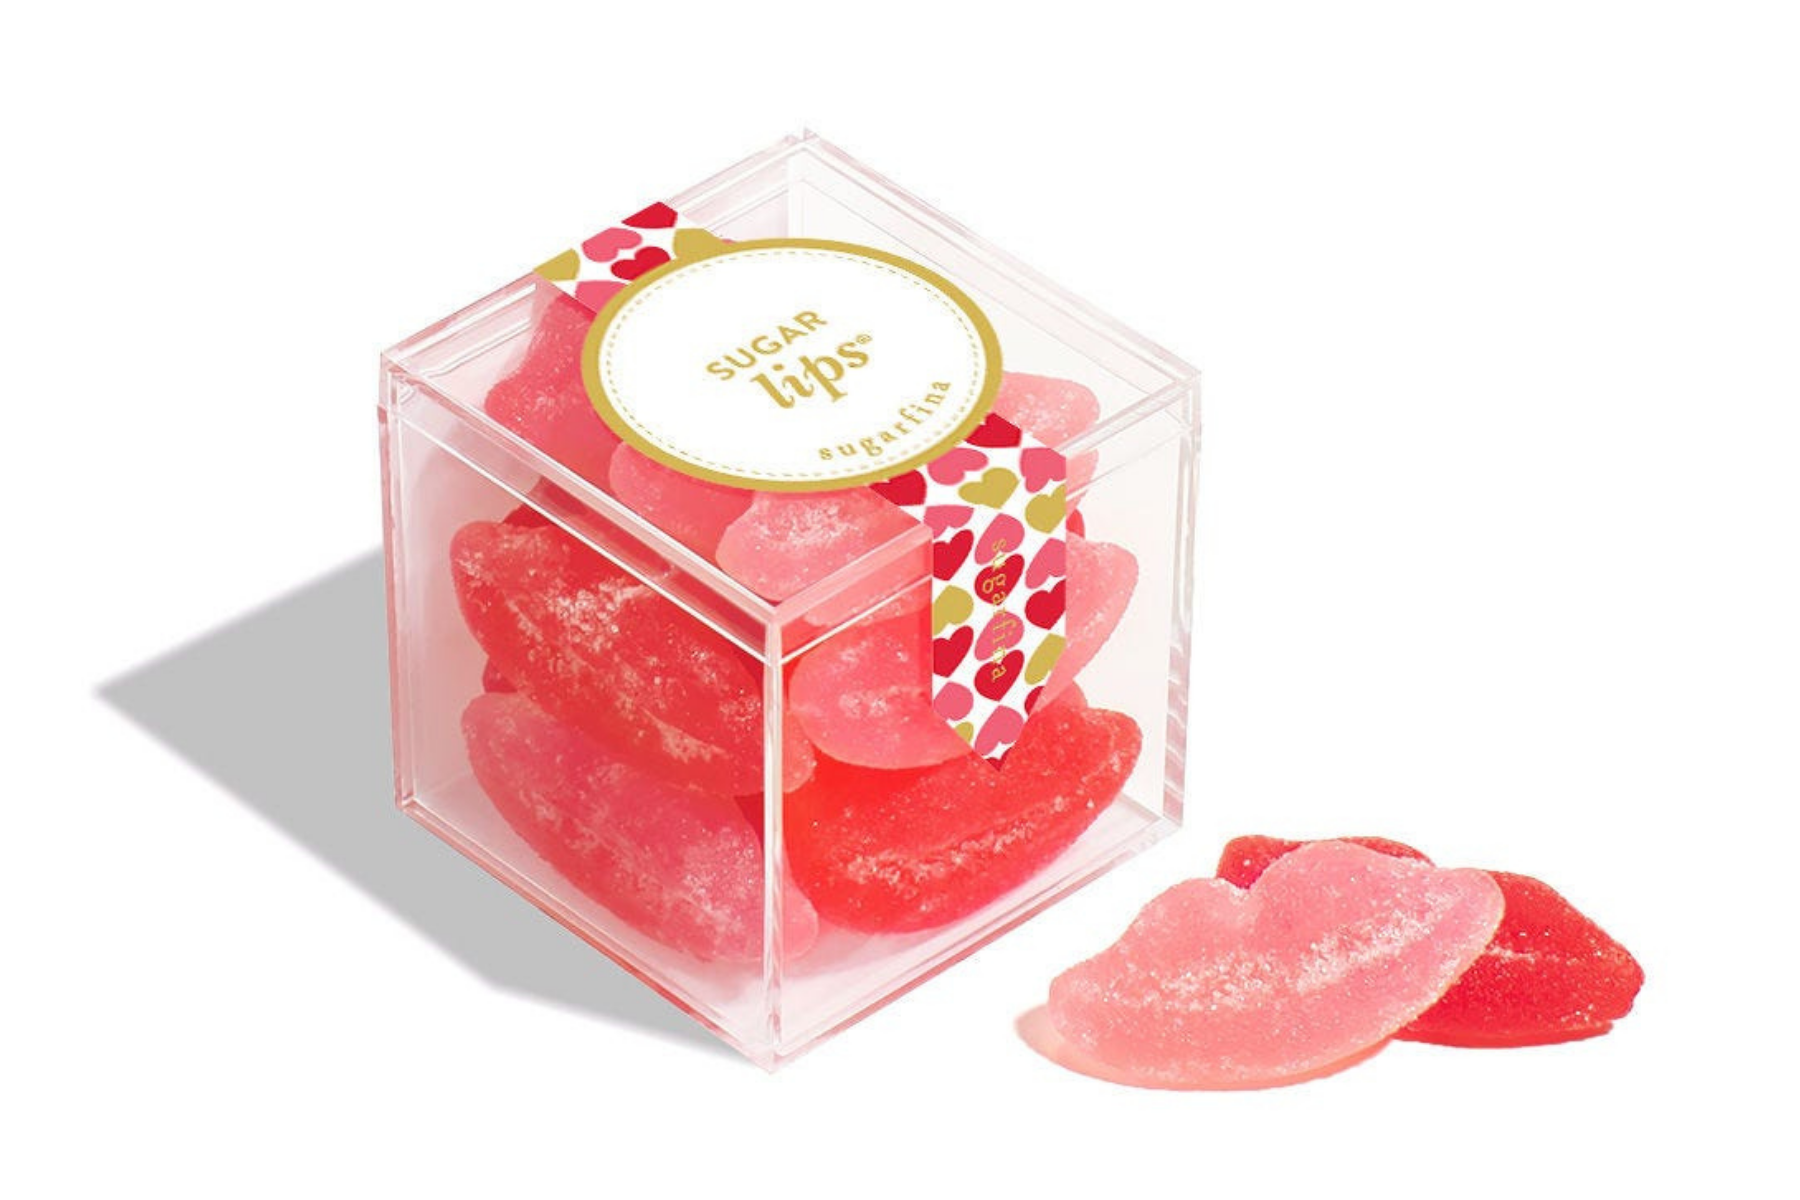 A clear box of Sugarfina's vegan gummy sugar lips 